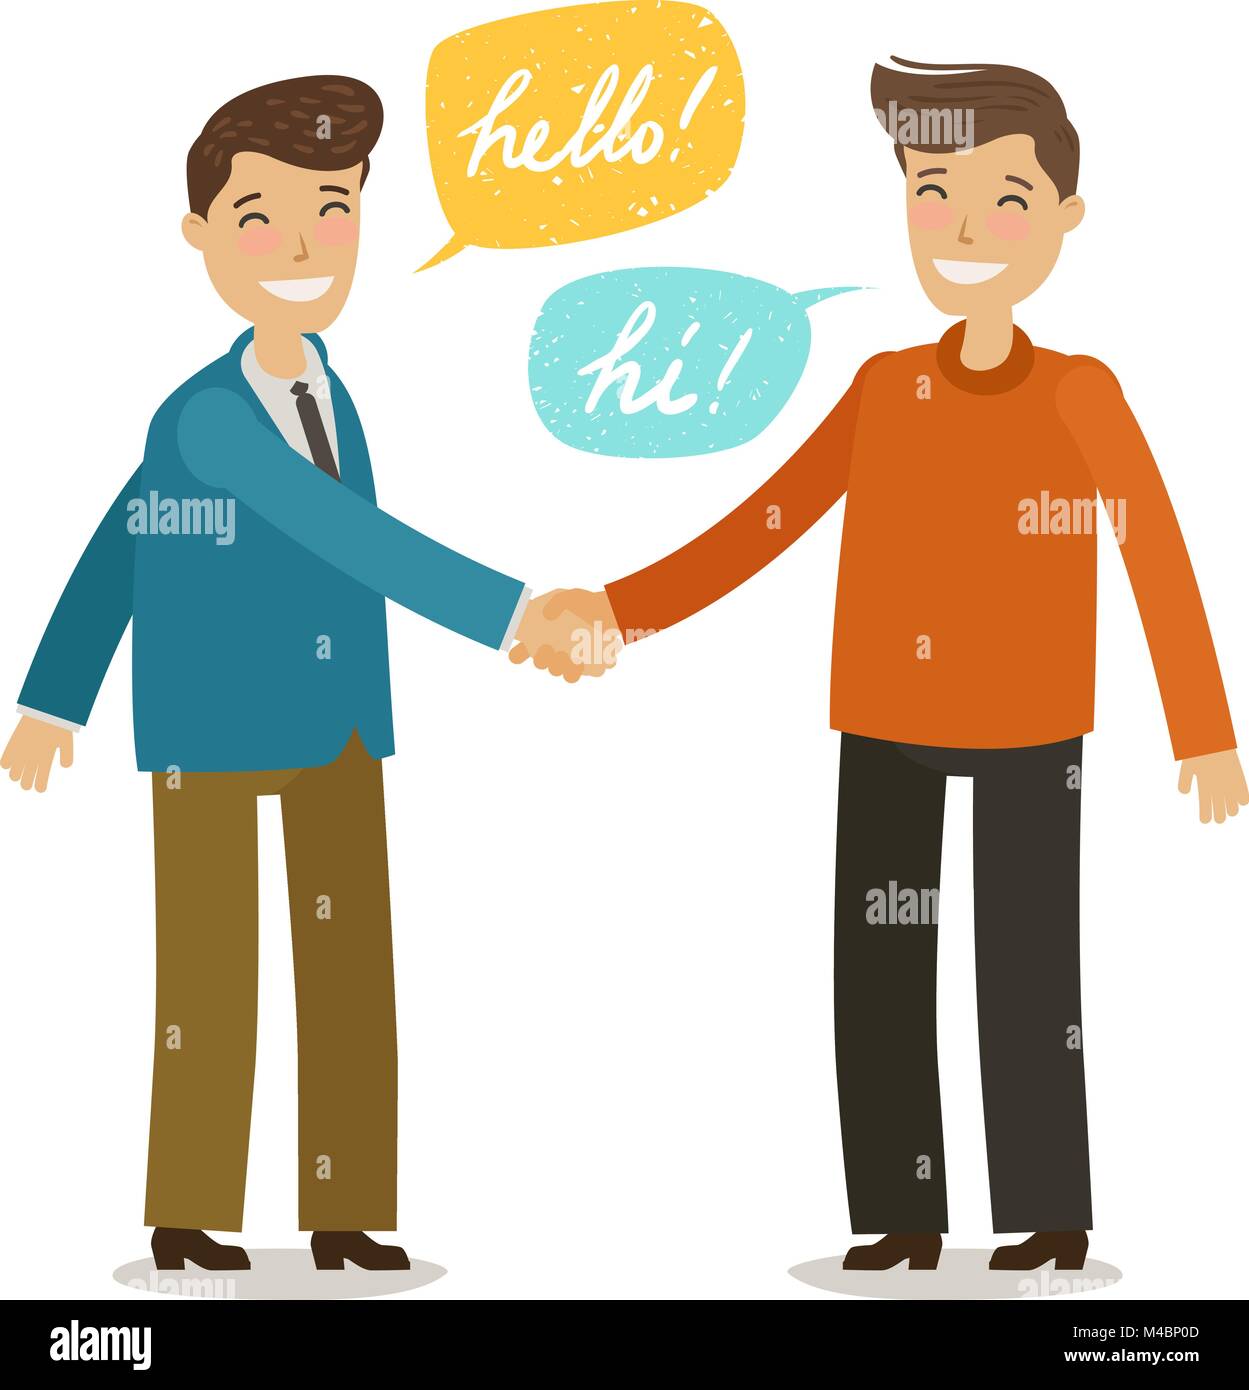 Handshake, shaking hands, friendship concept. Happy people shake hands in greeting. Cartoon vector illustration in flat style Stock Vector